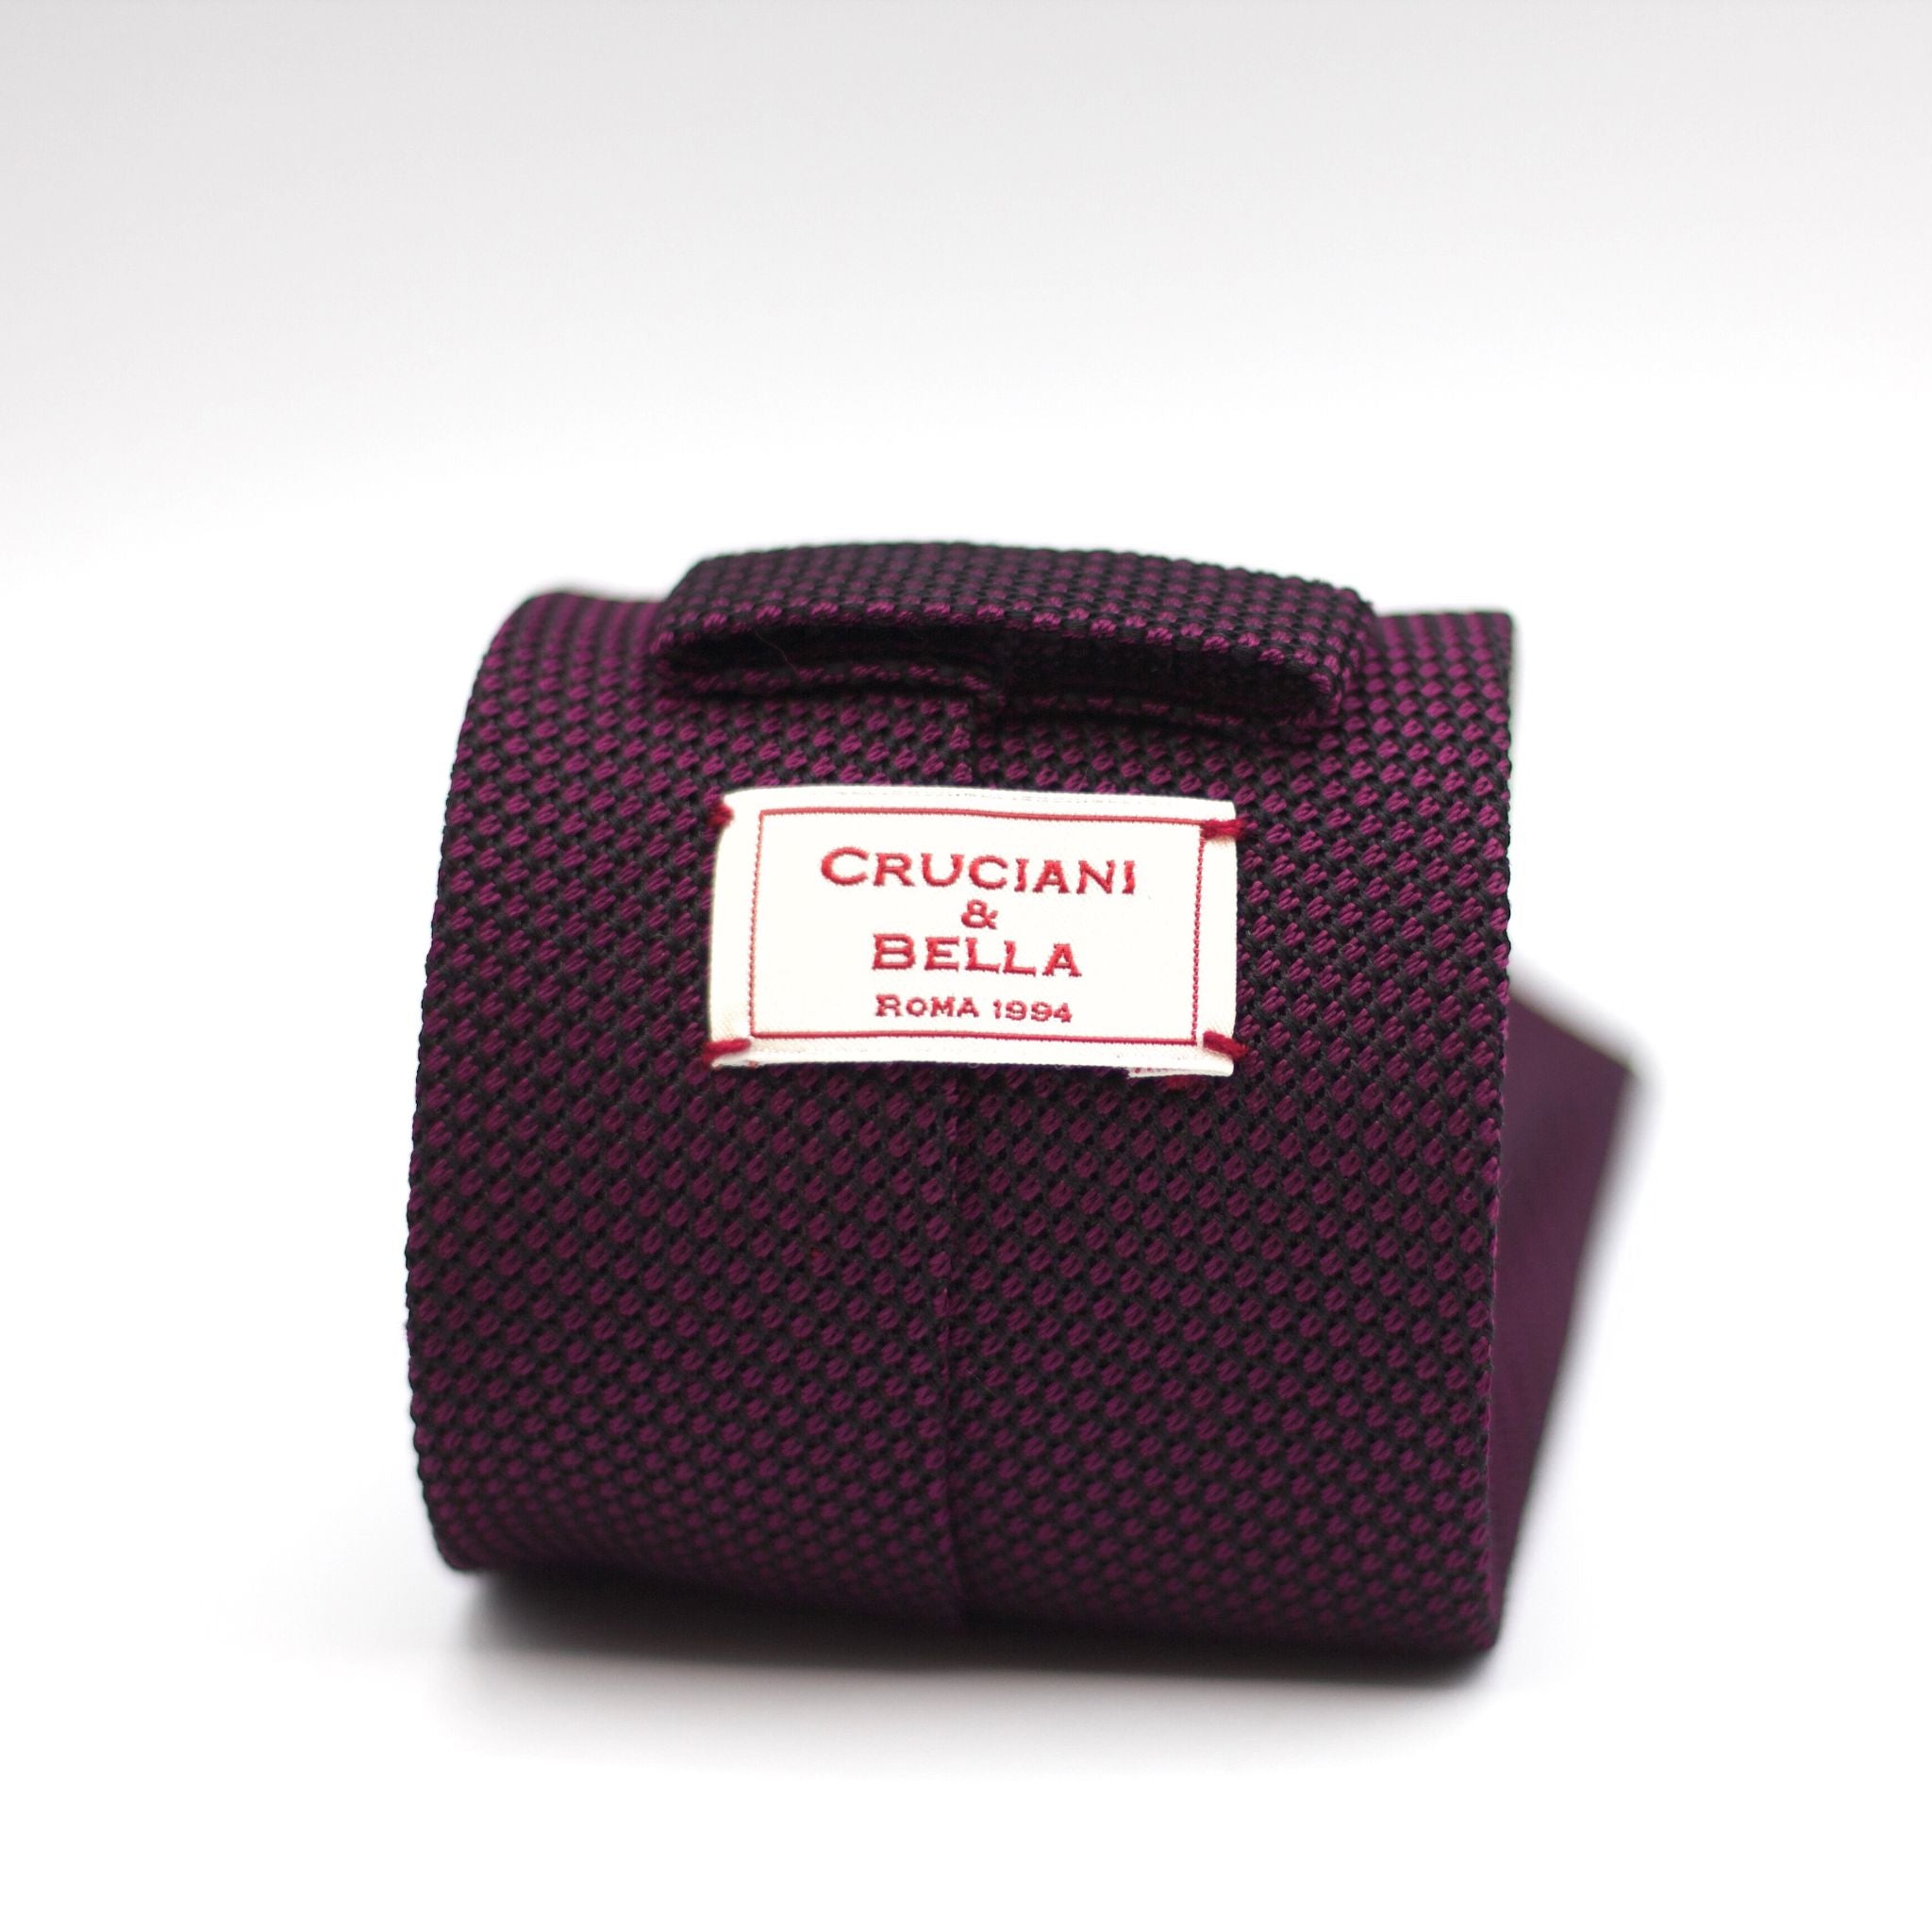 Cruciani & Bella 100% Silk Grenadine garza fina  Tipped Hand rolled blades Purple and black  tie Handmade in Italy 8 cm x 150 cm